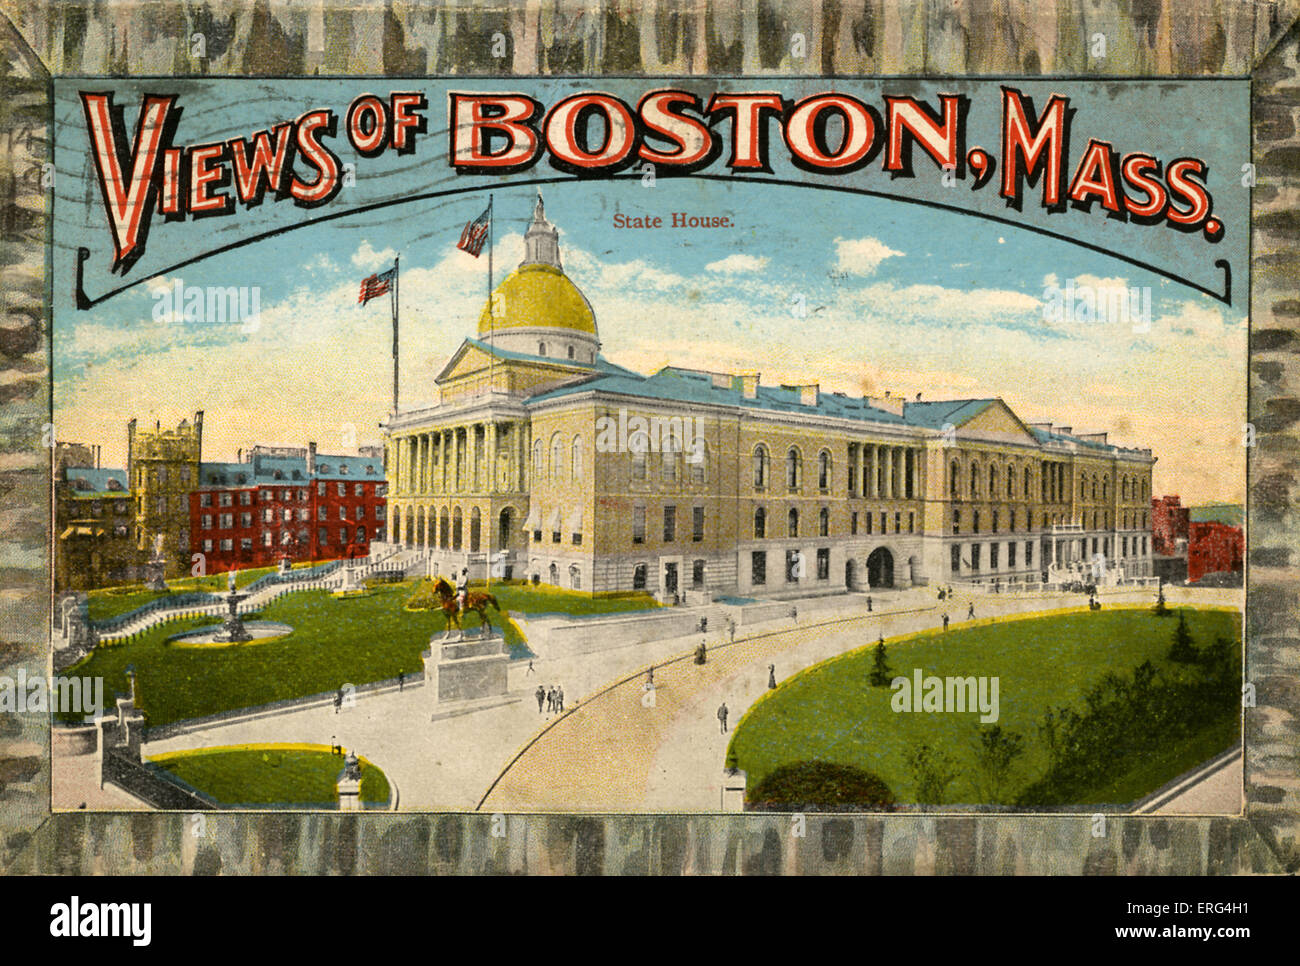 Boston: State House.  C.1900s Views of Boston, Mass. Stock Photo